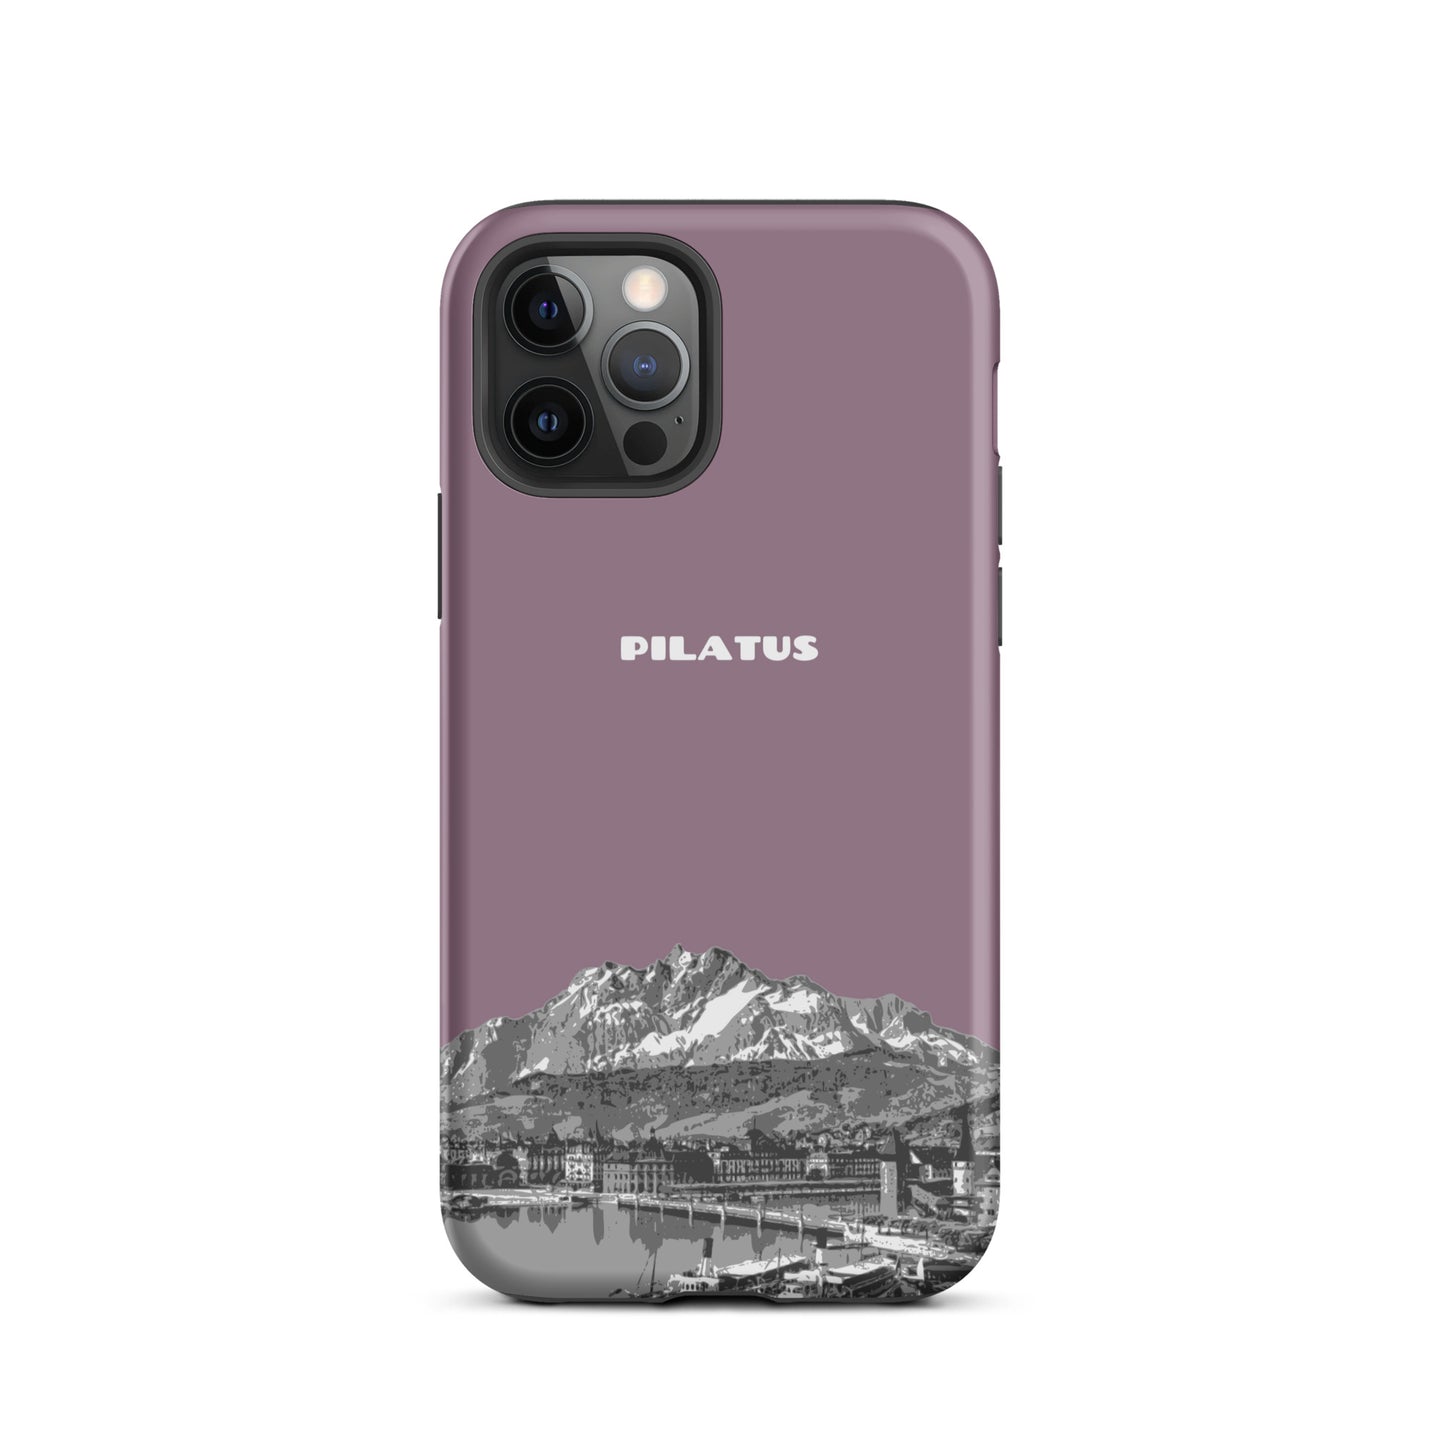 iPhone Case - Pilatus - Pastellviolett